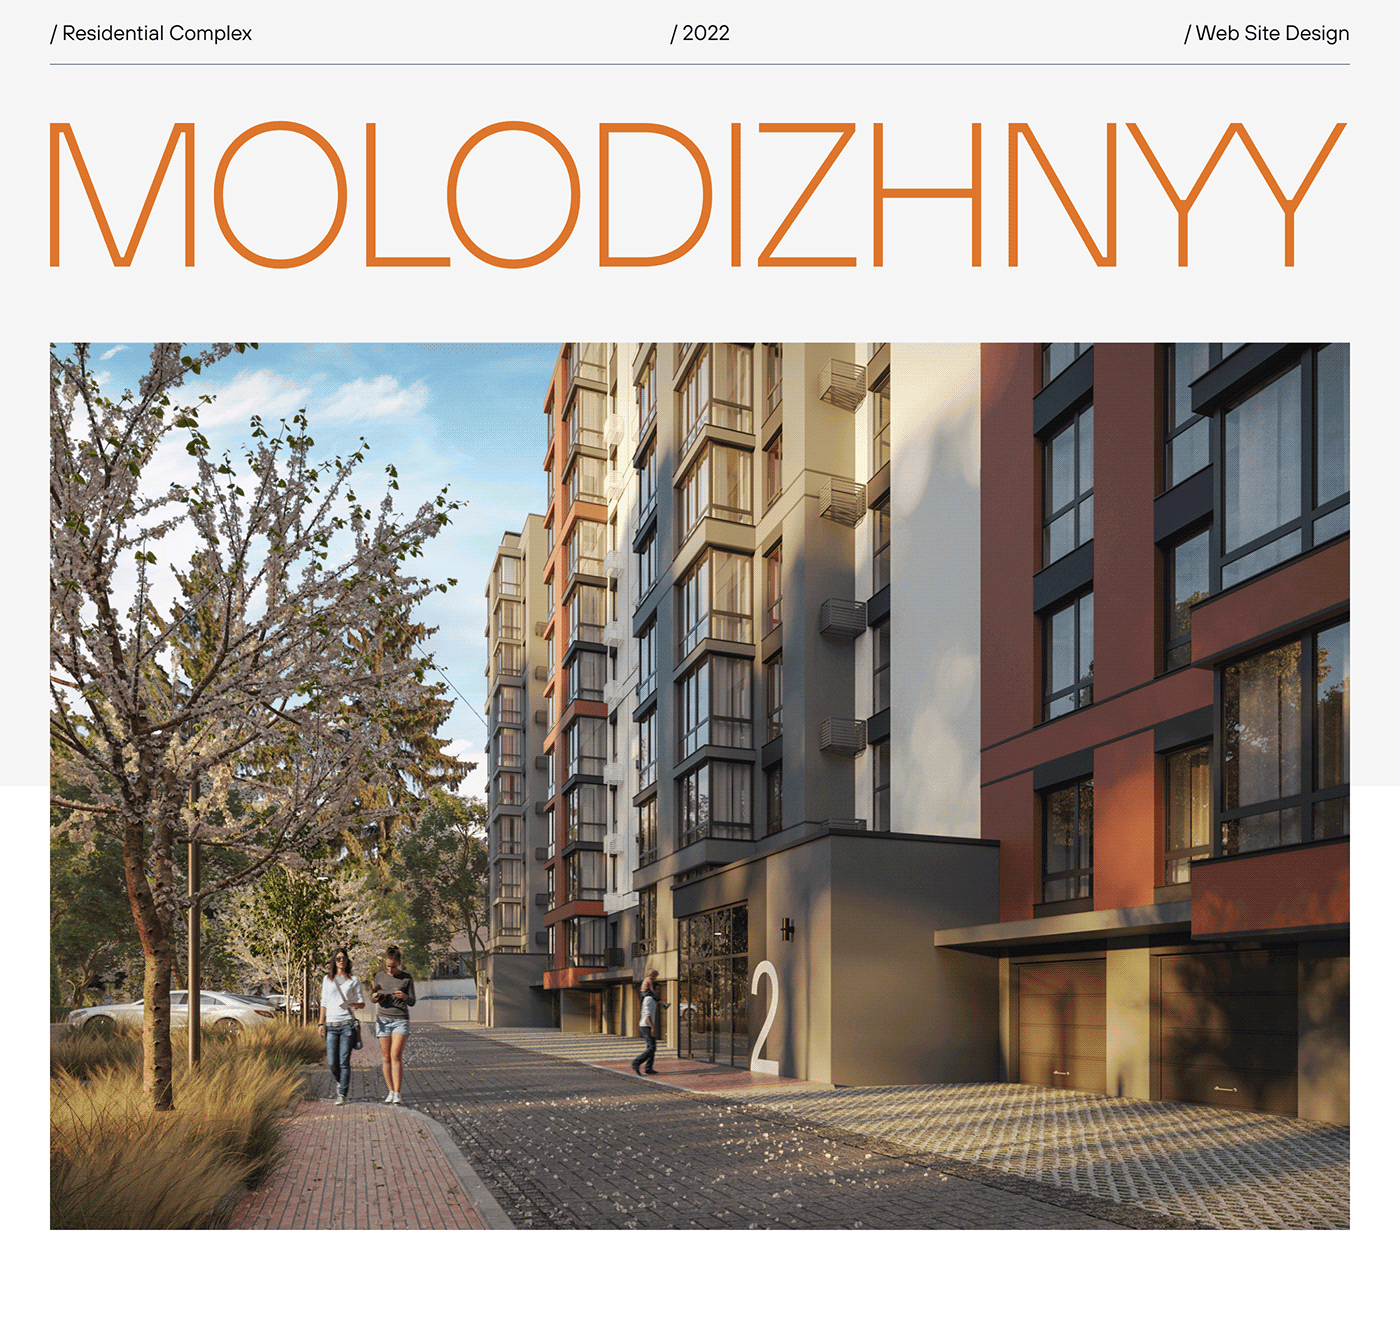 Molodizhnyy residential complex 2022 web site design